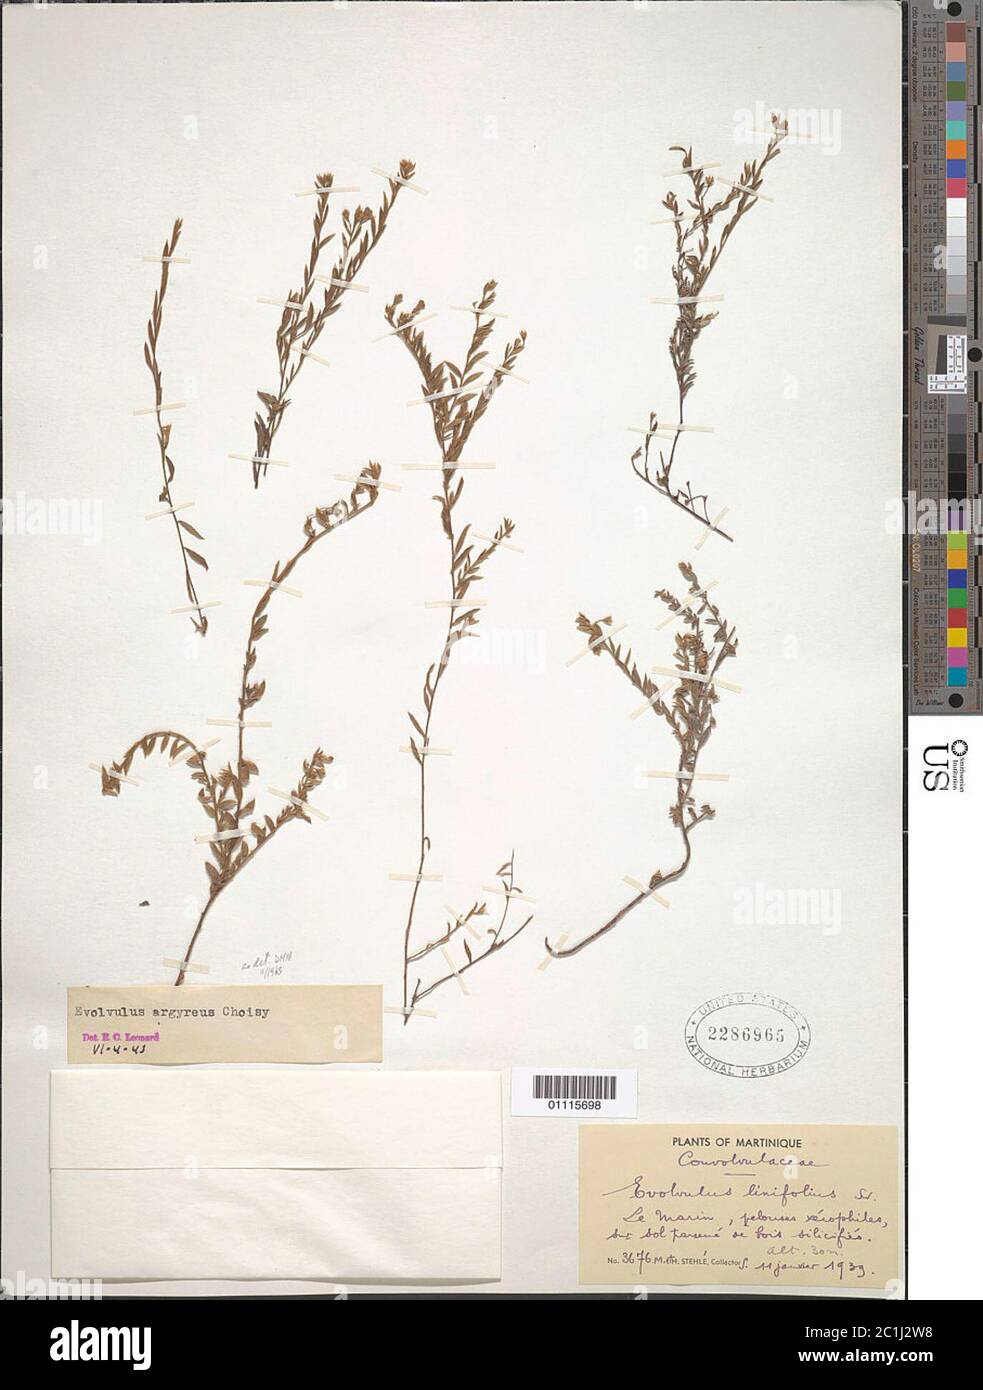 Evolvulus argyreus Choisy Evolvulus argyreus Choisy. Stock Photo